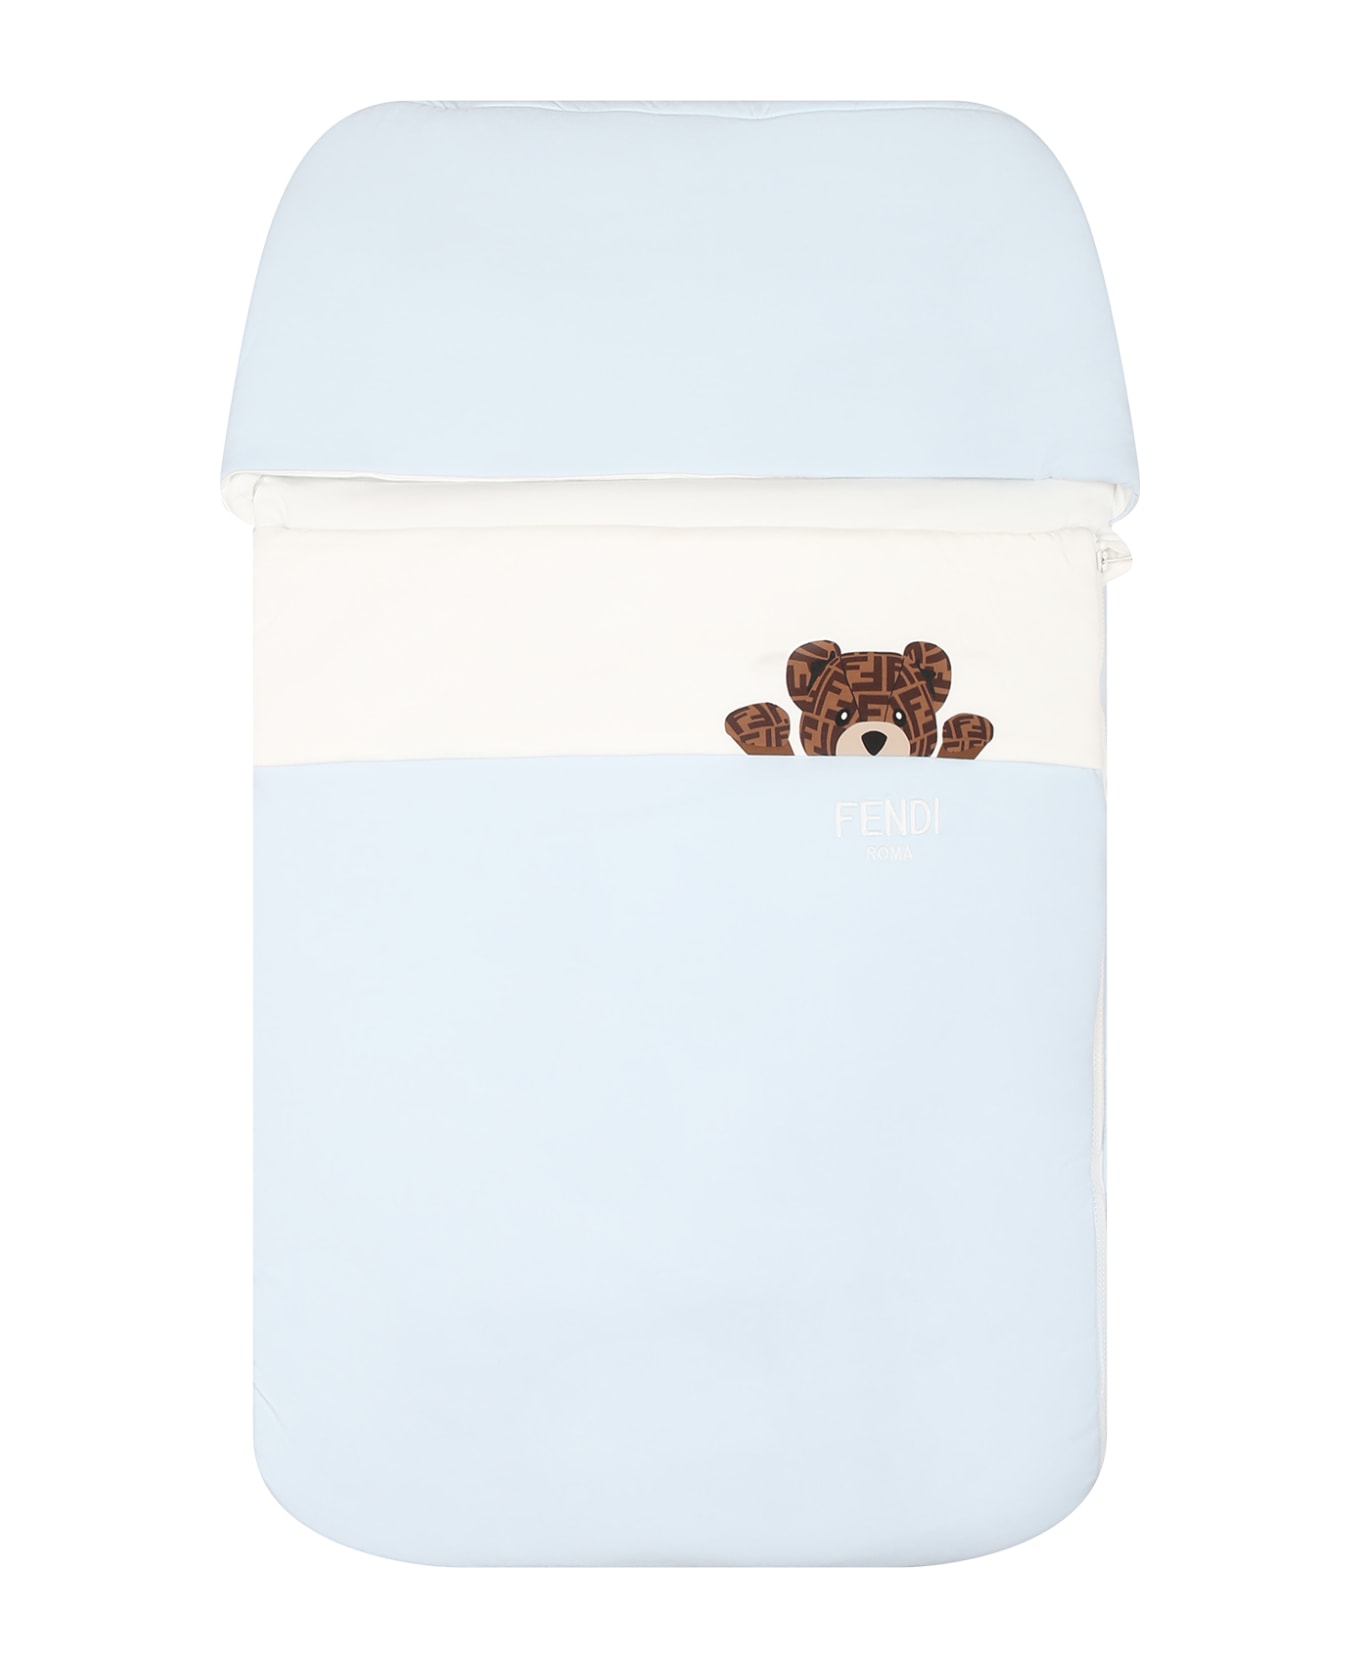 Fendi Light Blue Sleeping Bag For Baby Boy With Bear And Fendi Logo - Light Blue